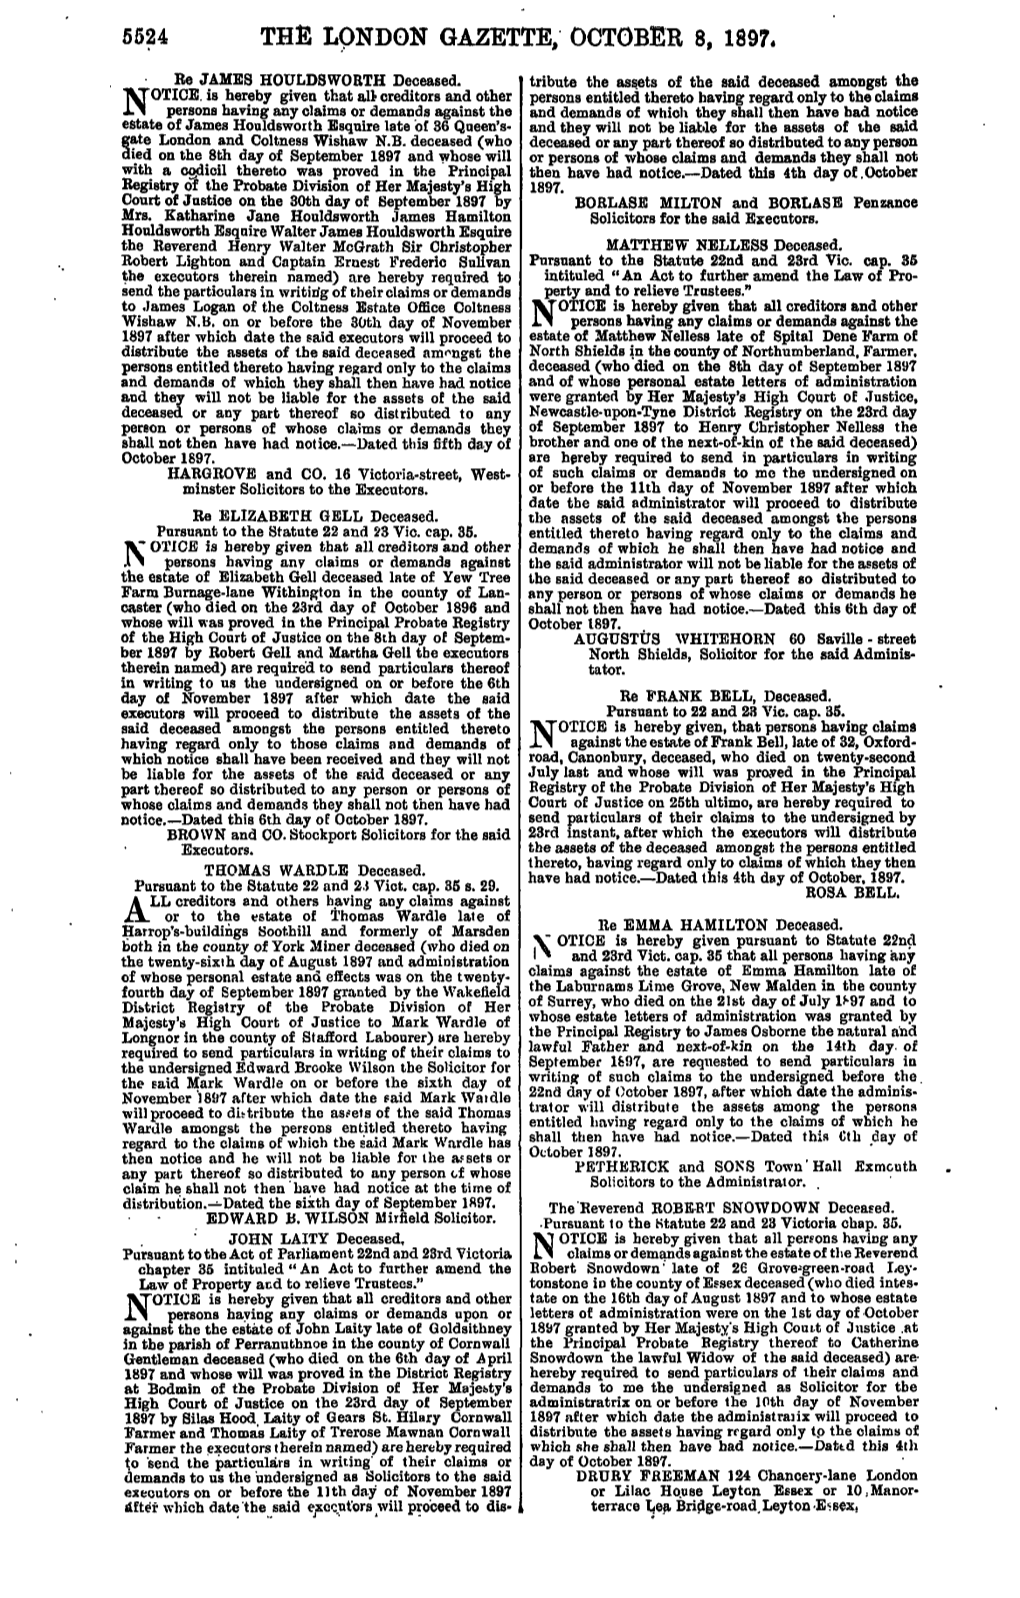 5524 the London Gazette; October 8, 1897*